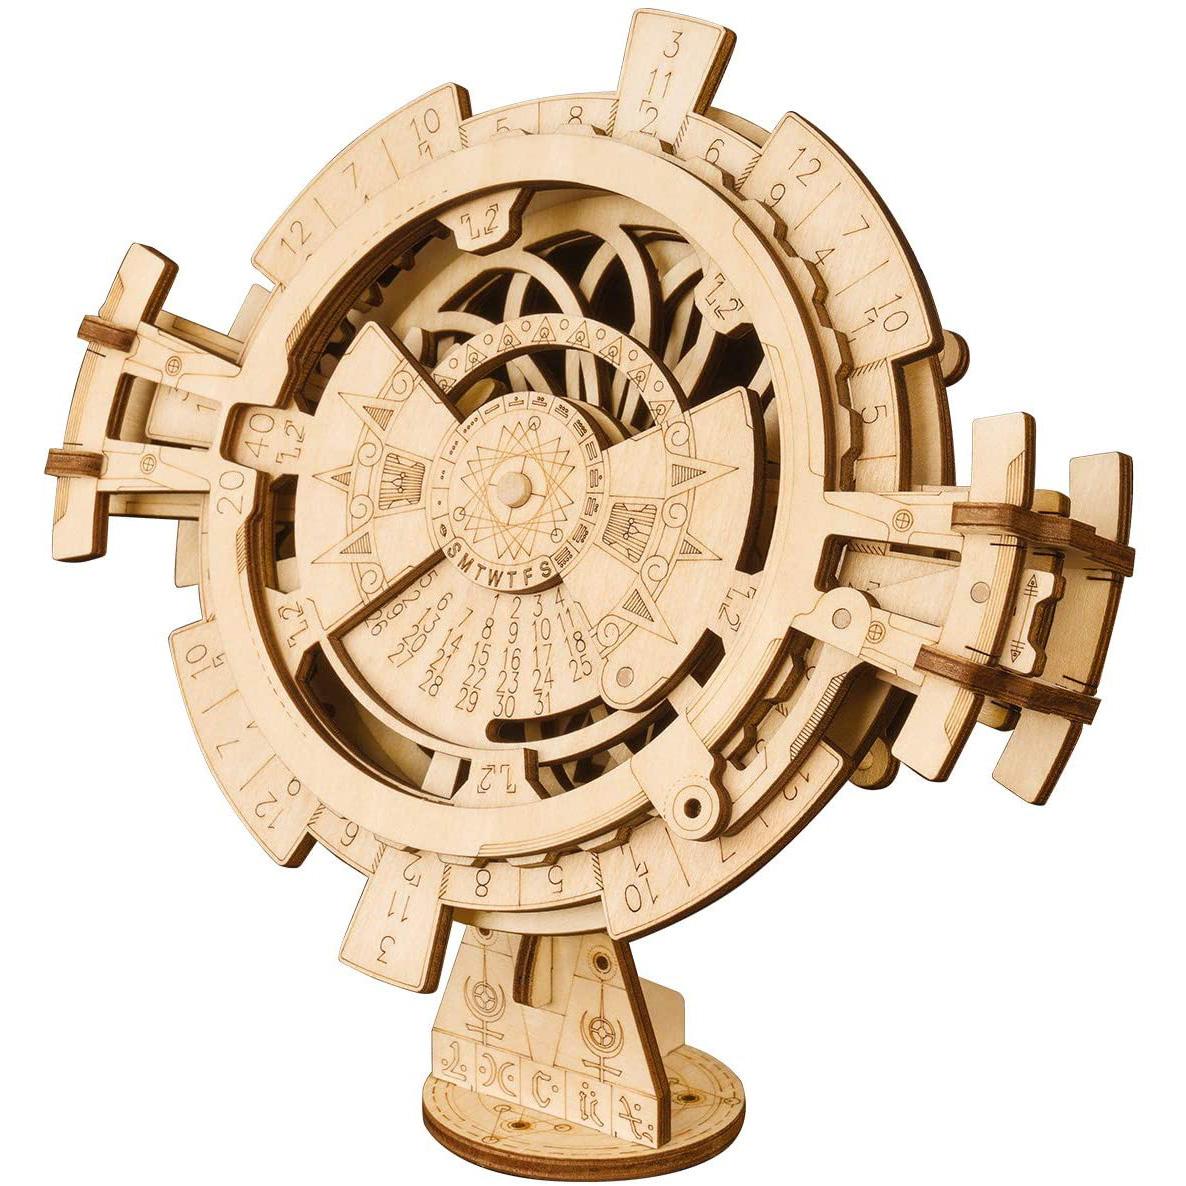 Robotime 3D Wooden Mechanical Puzzle DIY Perpetual Calendar for $14.87